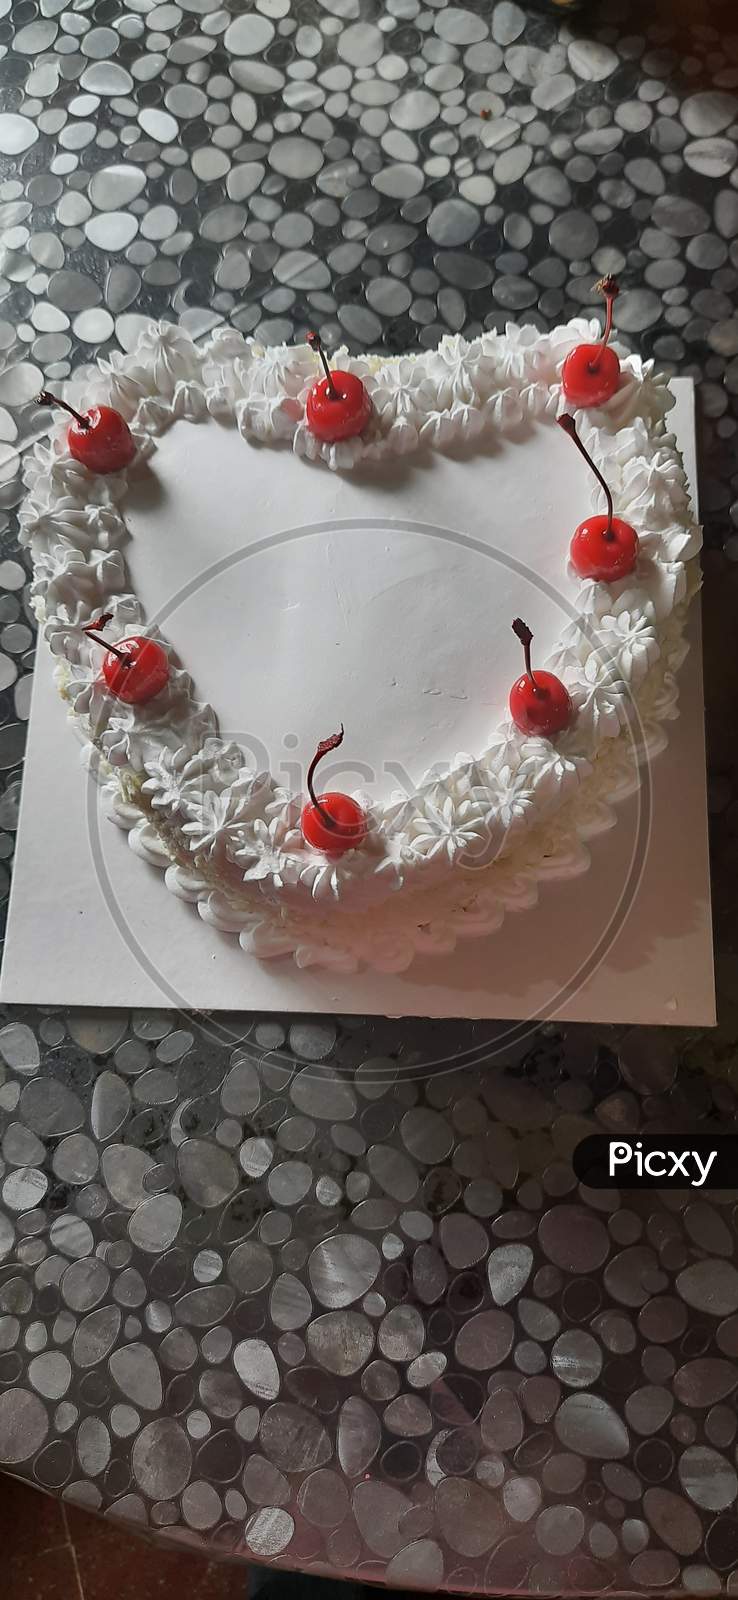 Beautiful heart shaped cake